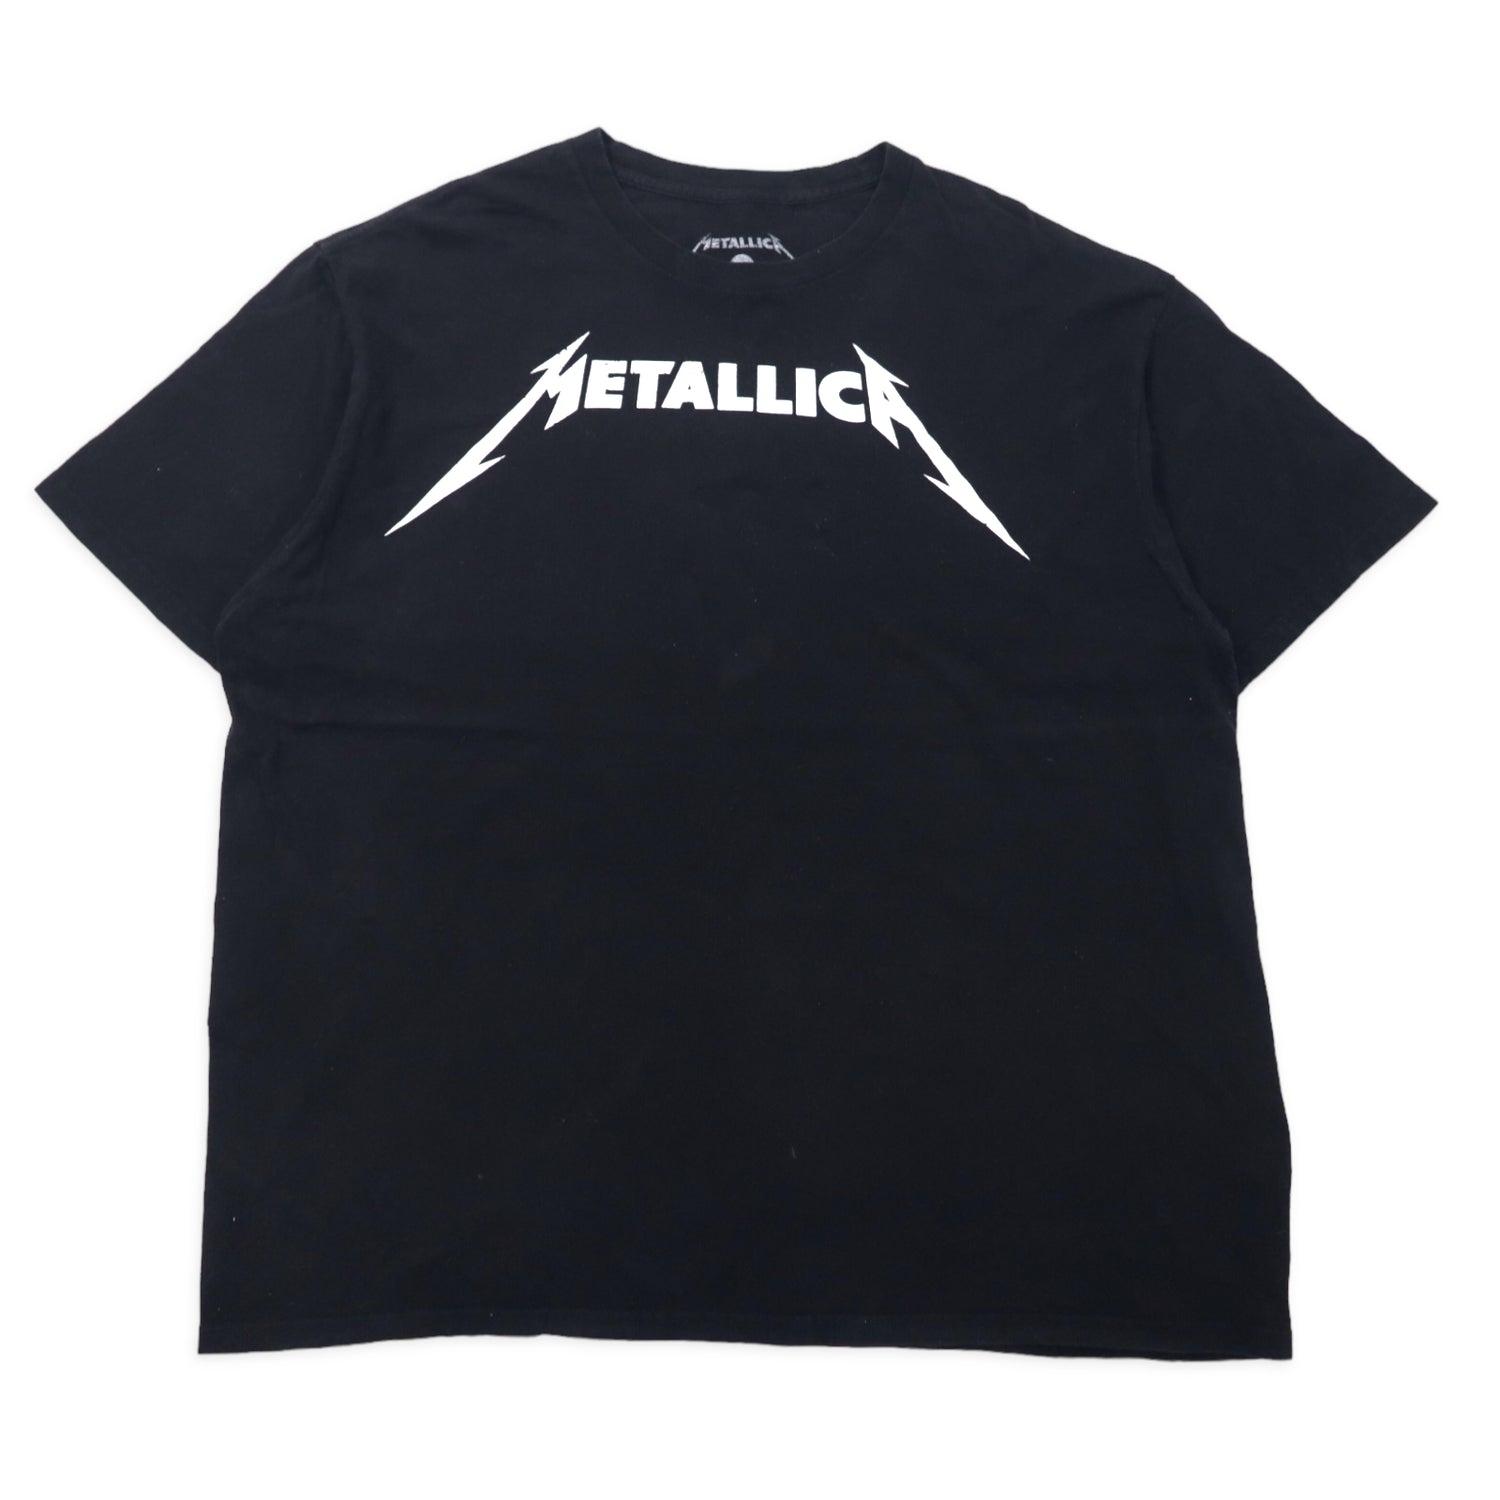 METALLICA Metallica Band T Shirt XXL Black Cotton Big Size Mexico